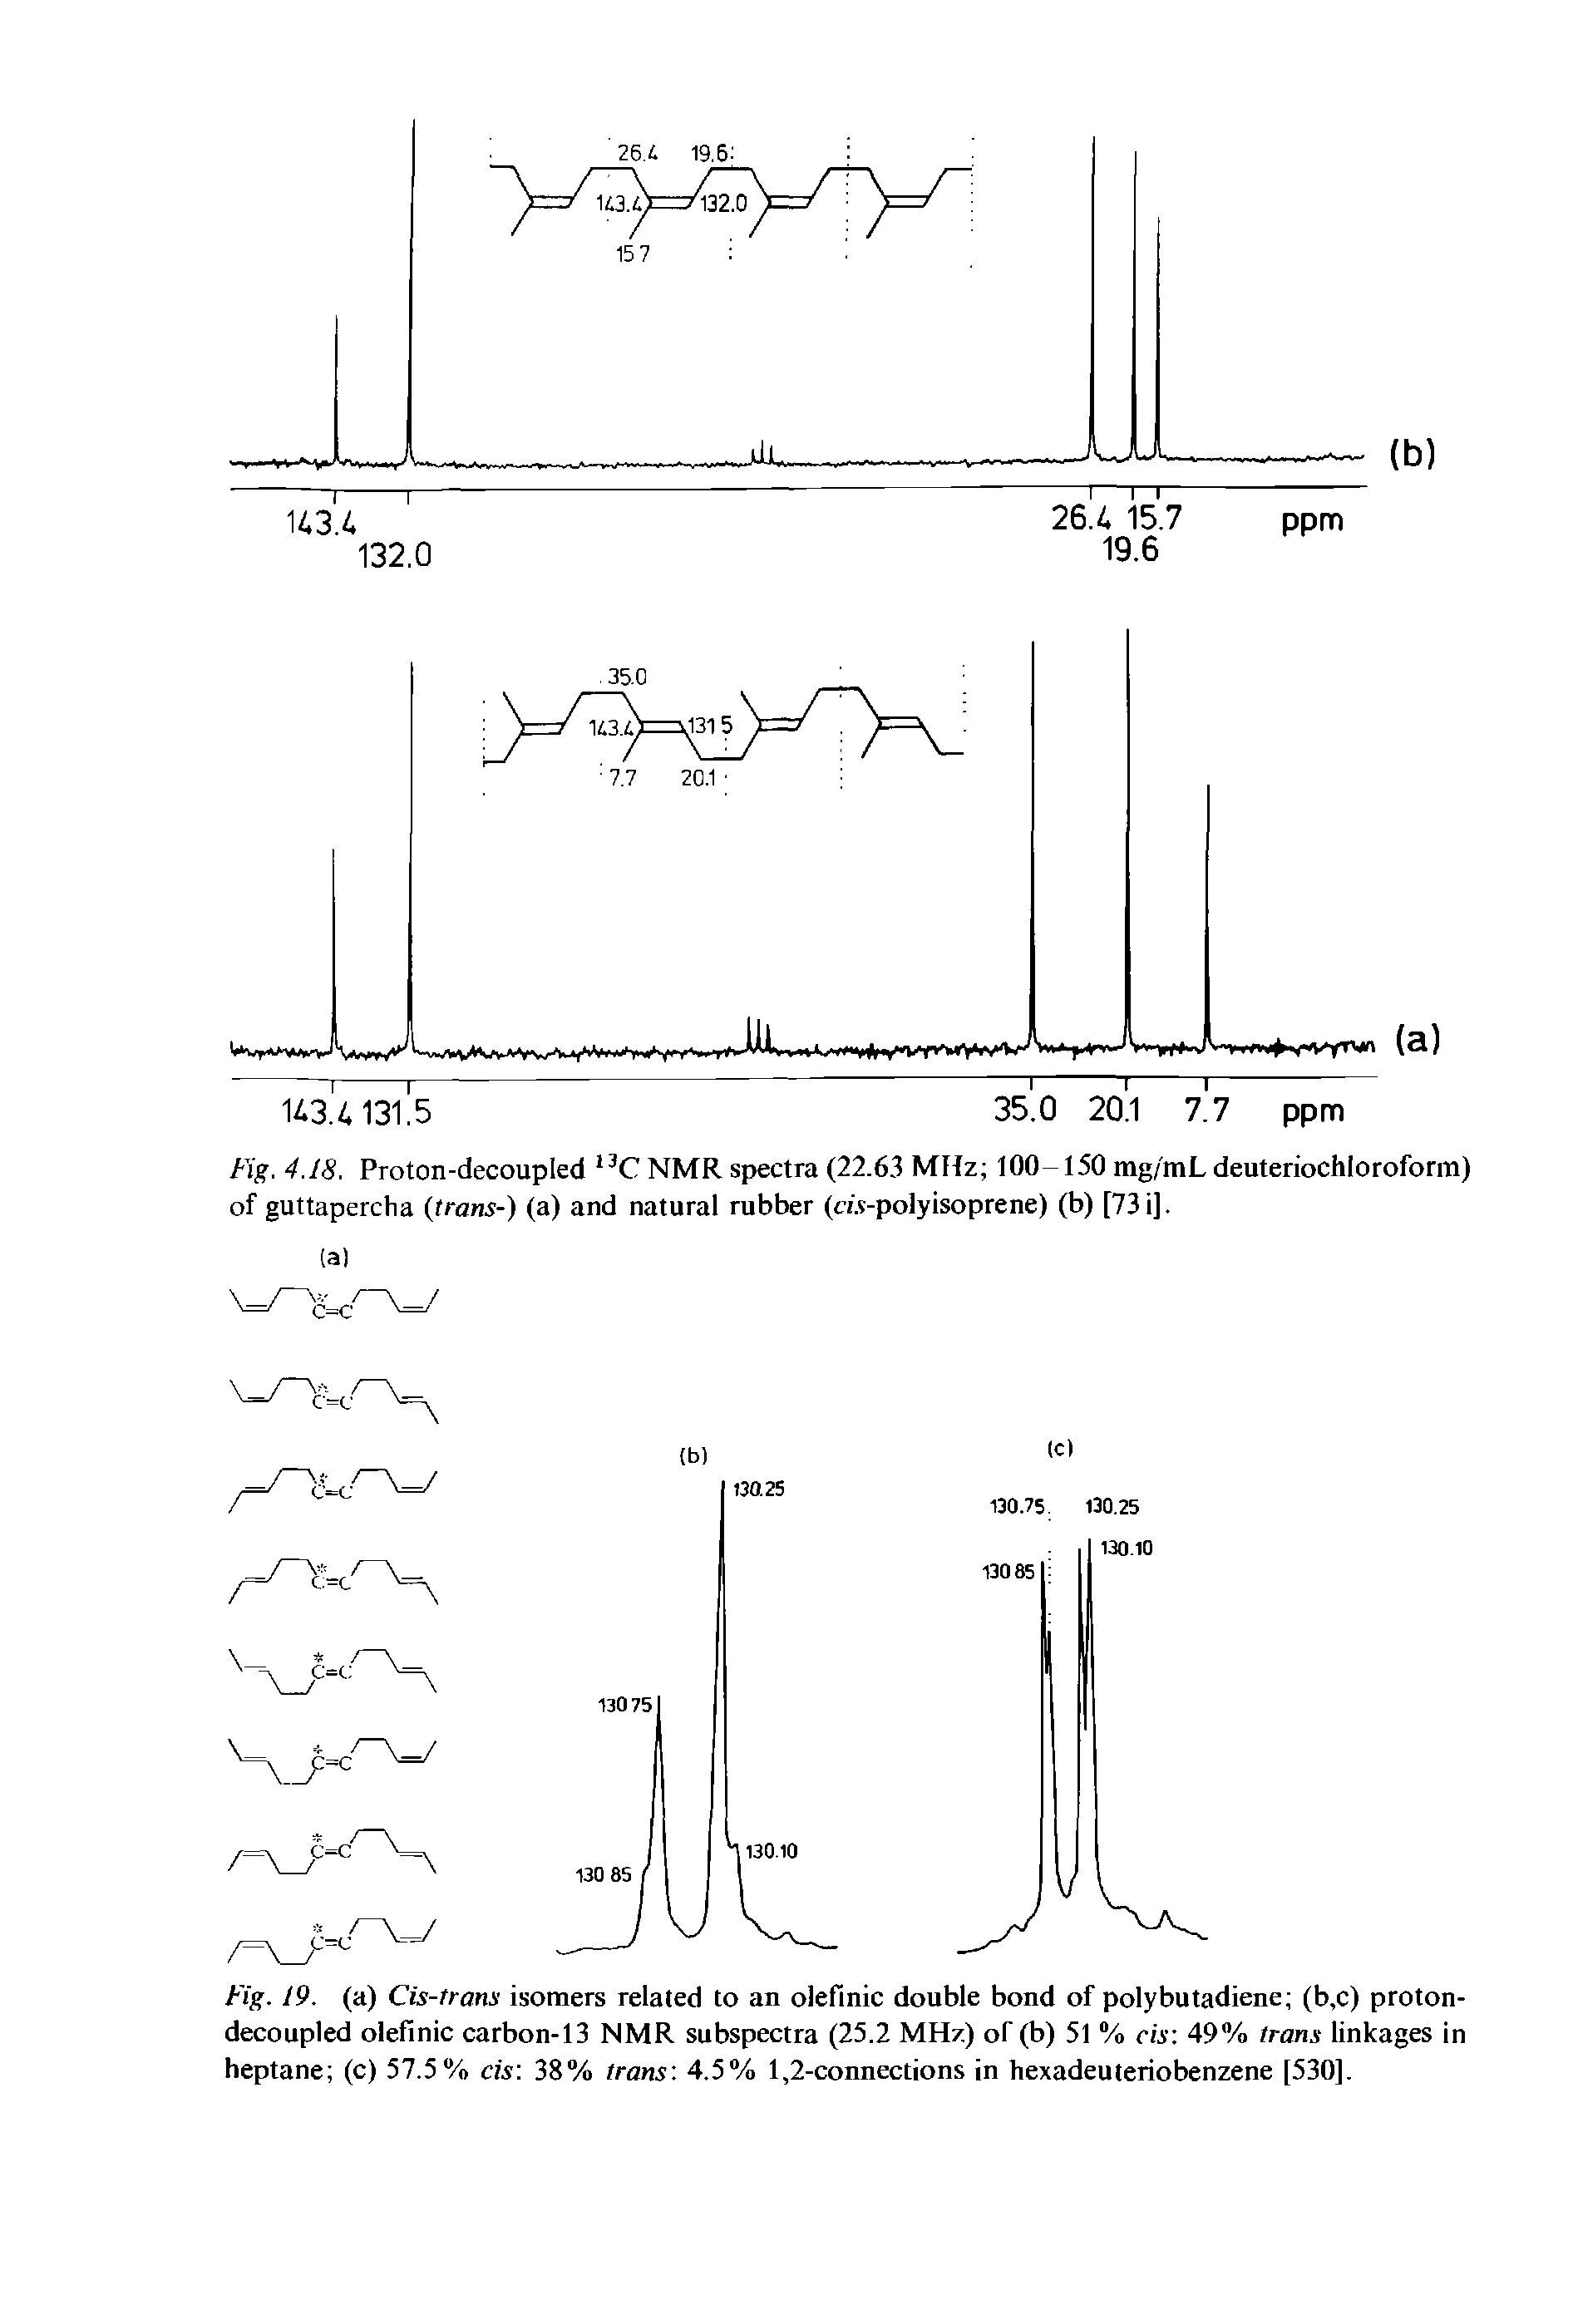 Fig. 4.18. Proton-decoupled 13C NMR spectra (22.63 MHz 100-150 mg/ mL deuteriochloroform) of guttapercha (trans-) (a) and natural rubber (m-polyisoprene) (b) [73 i].